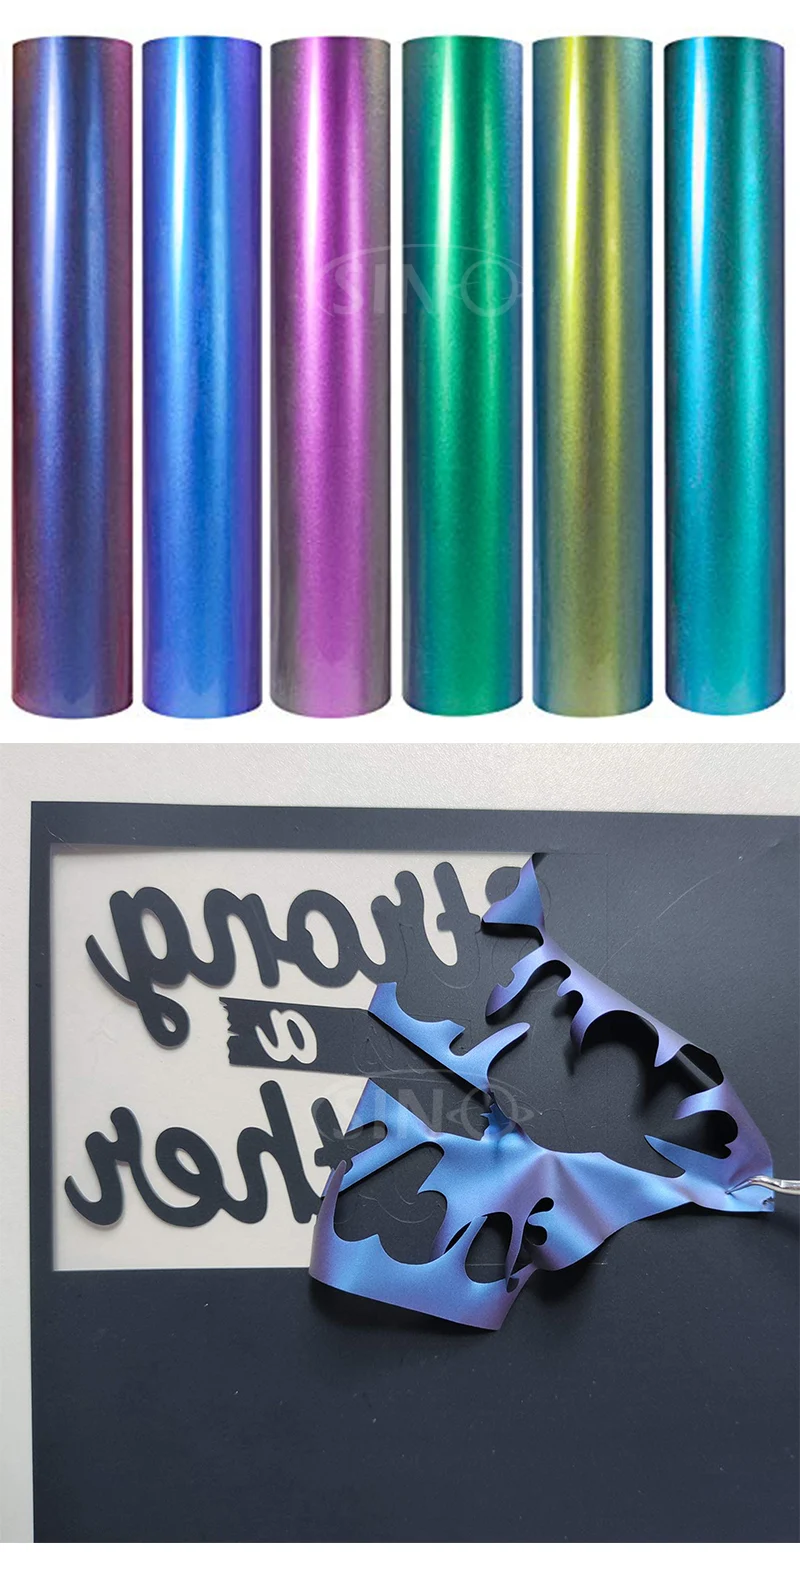 Textile Chameleon Meallic Color Change Heat Transfer Vinyl